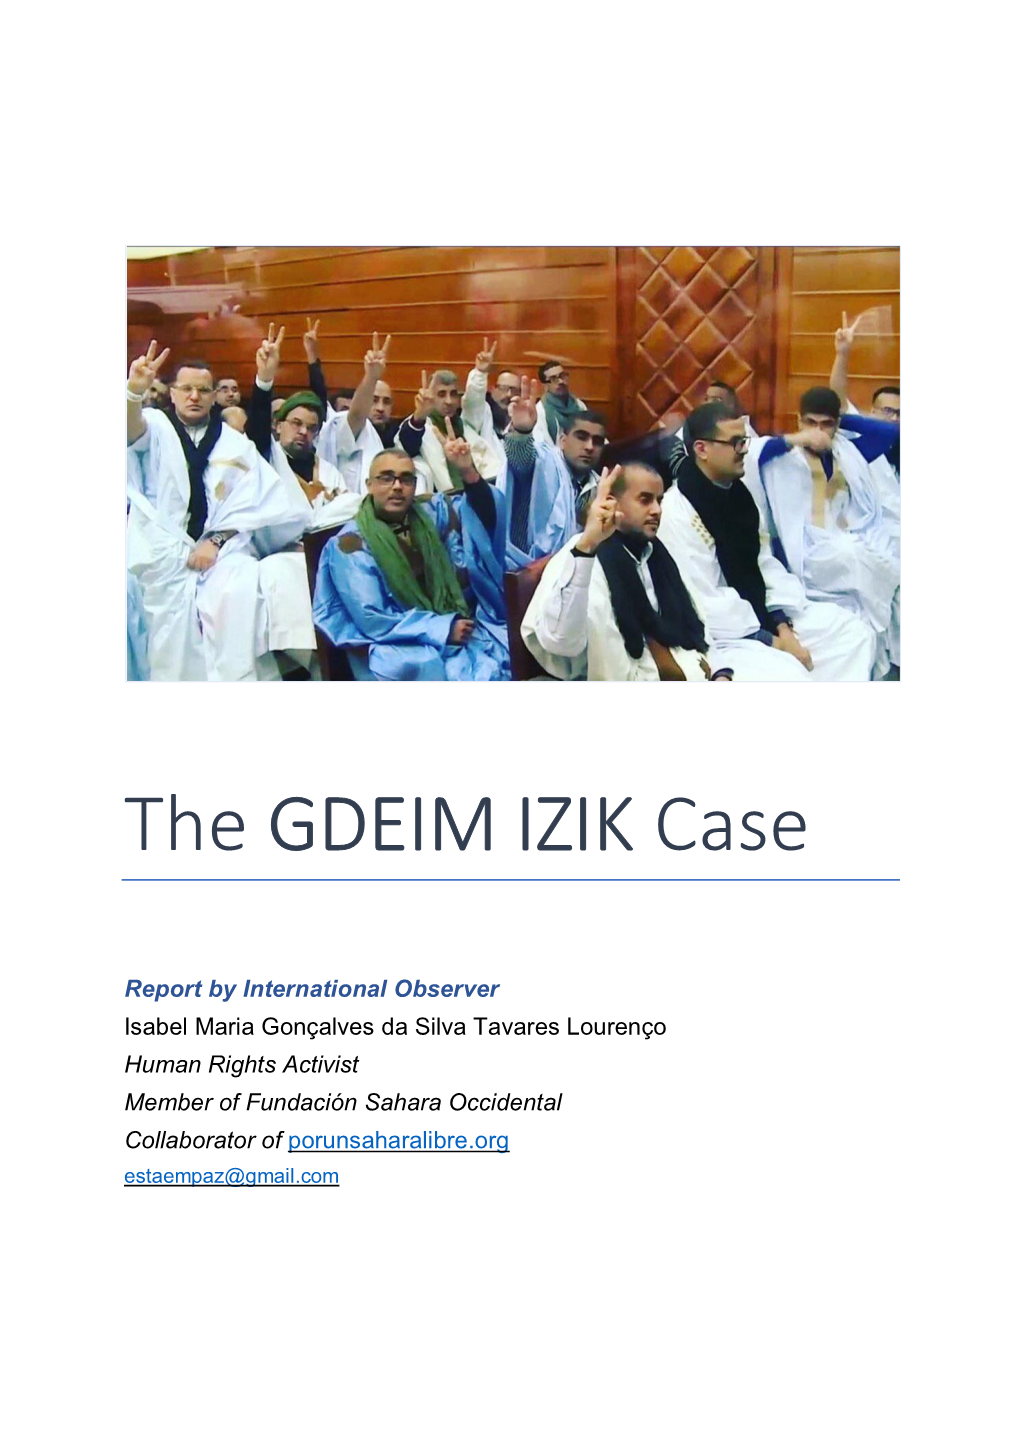 The GDEIM IZIK Case